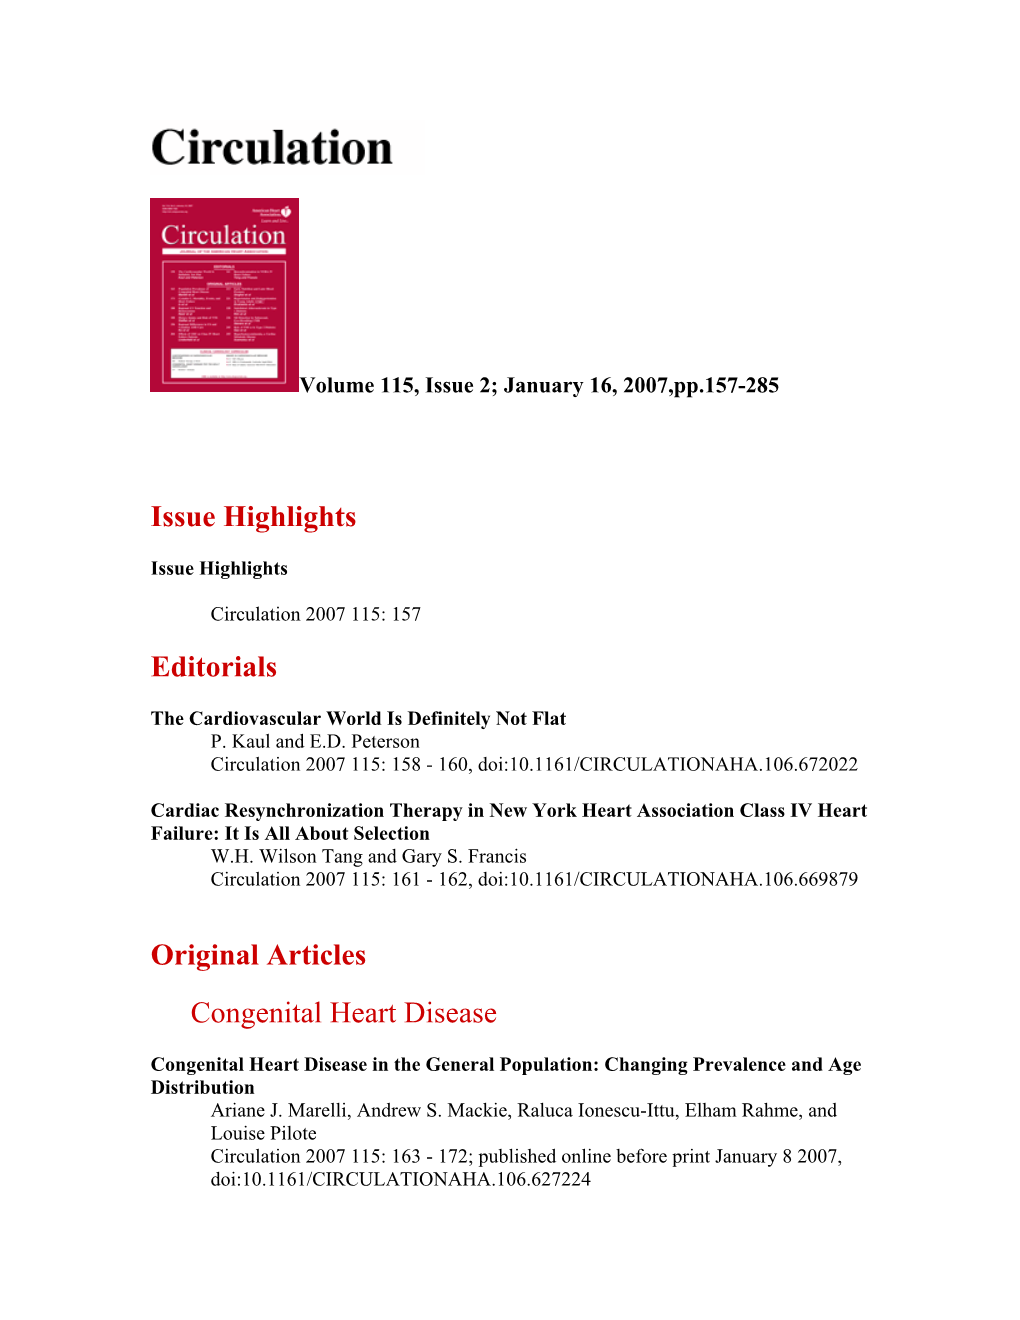 Issue Highlights Editorials Original Articles Congenital Heart Disease